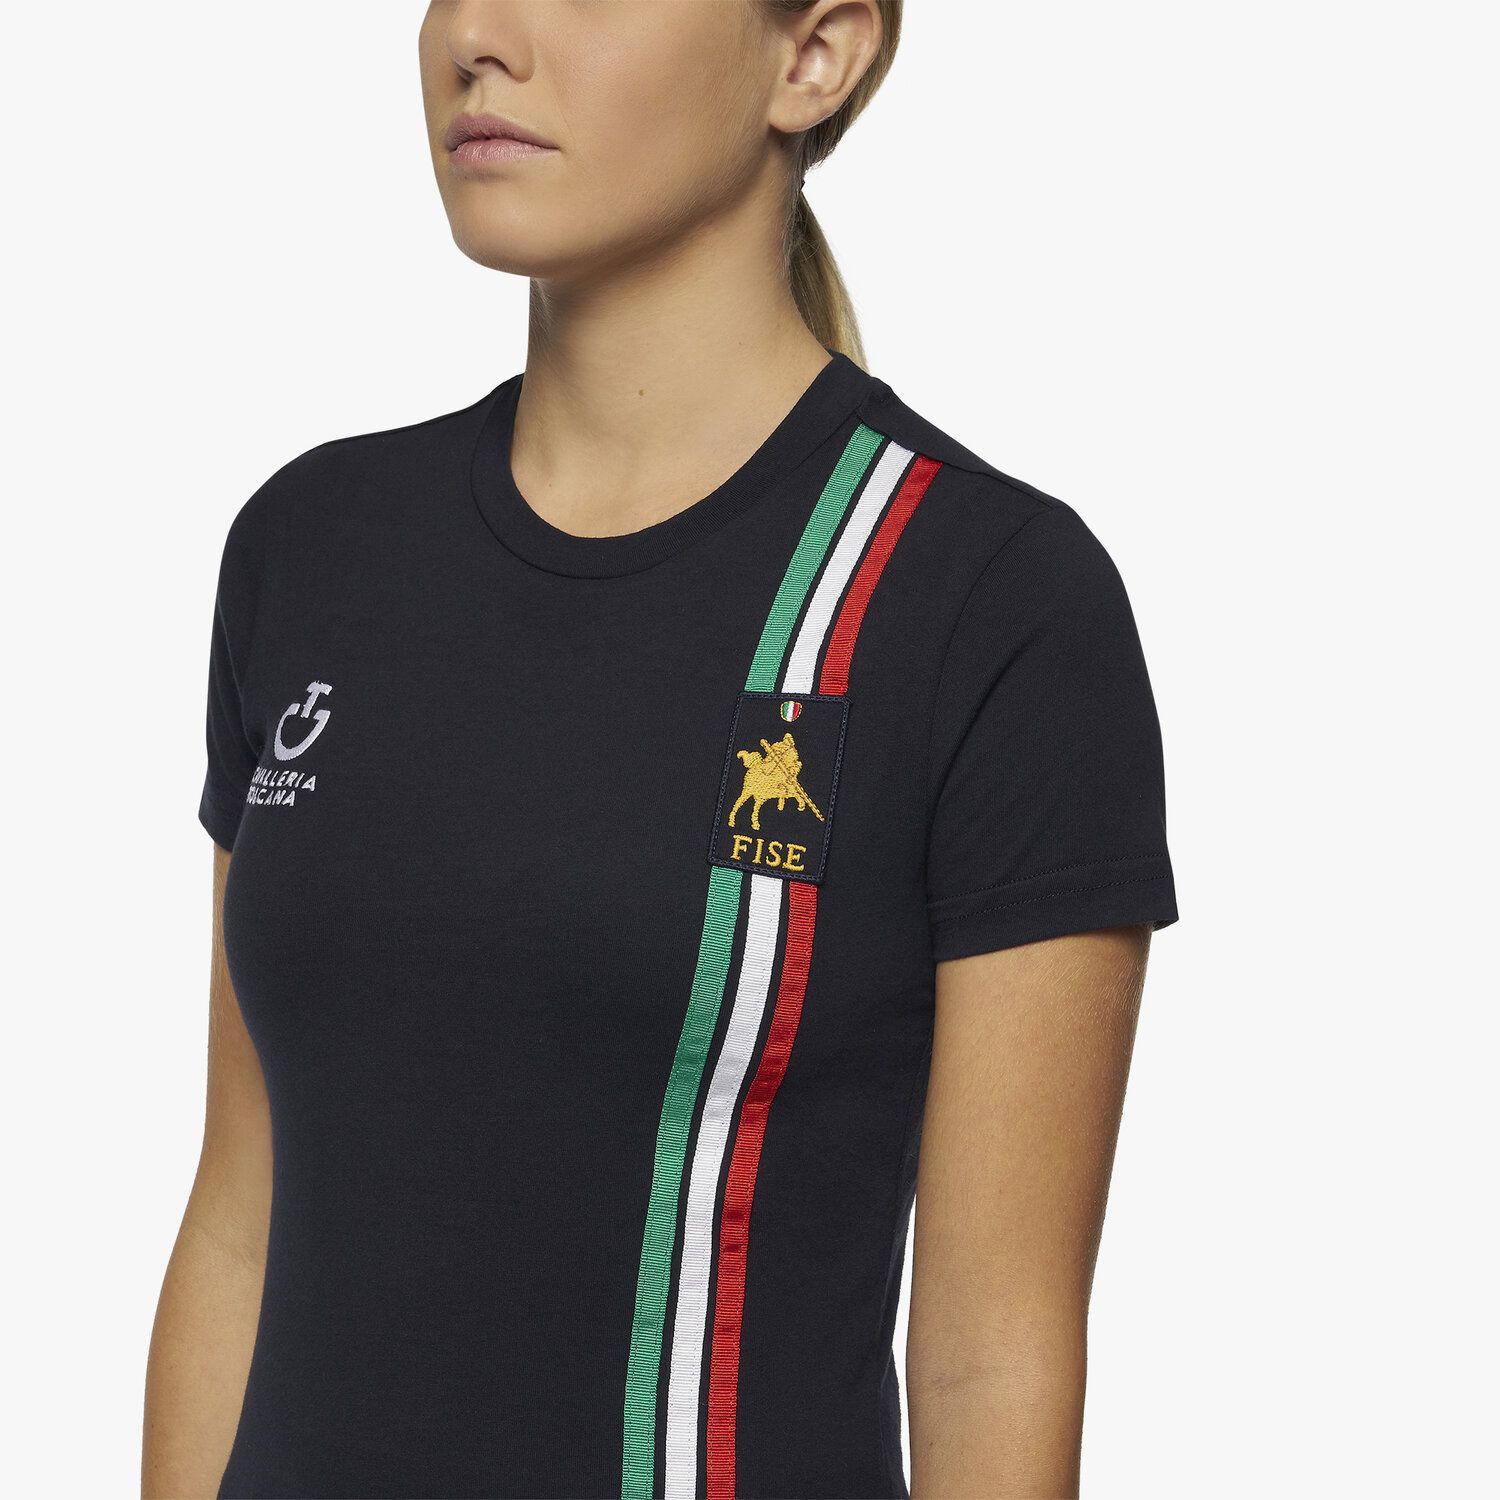 Cavalleria Toscana FISE giril's t-shirt NAVY-5